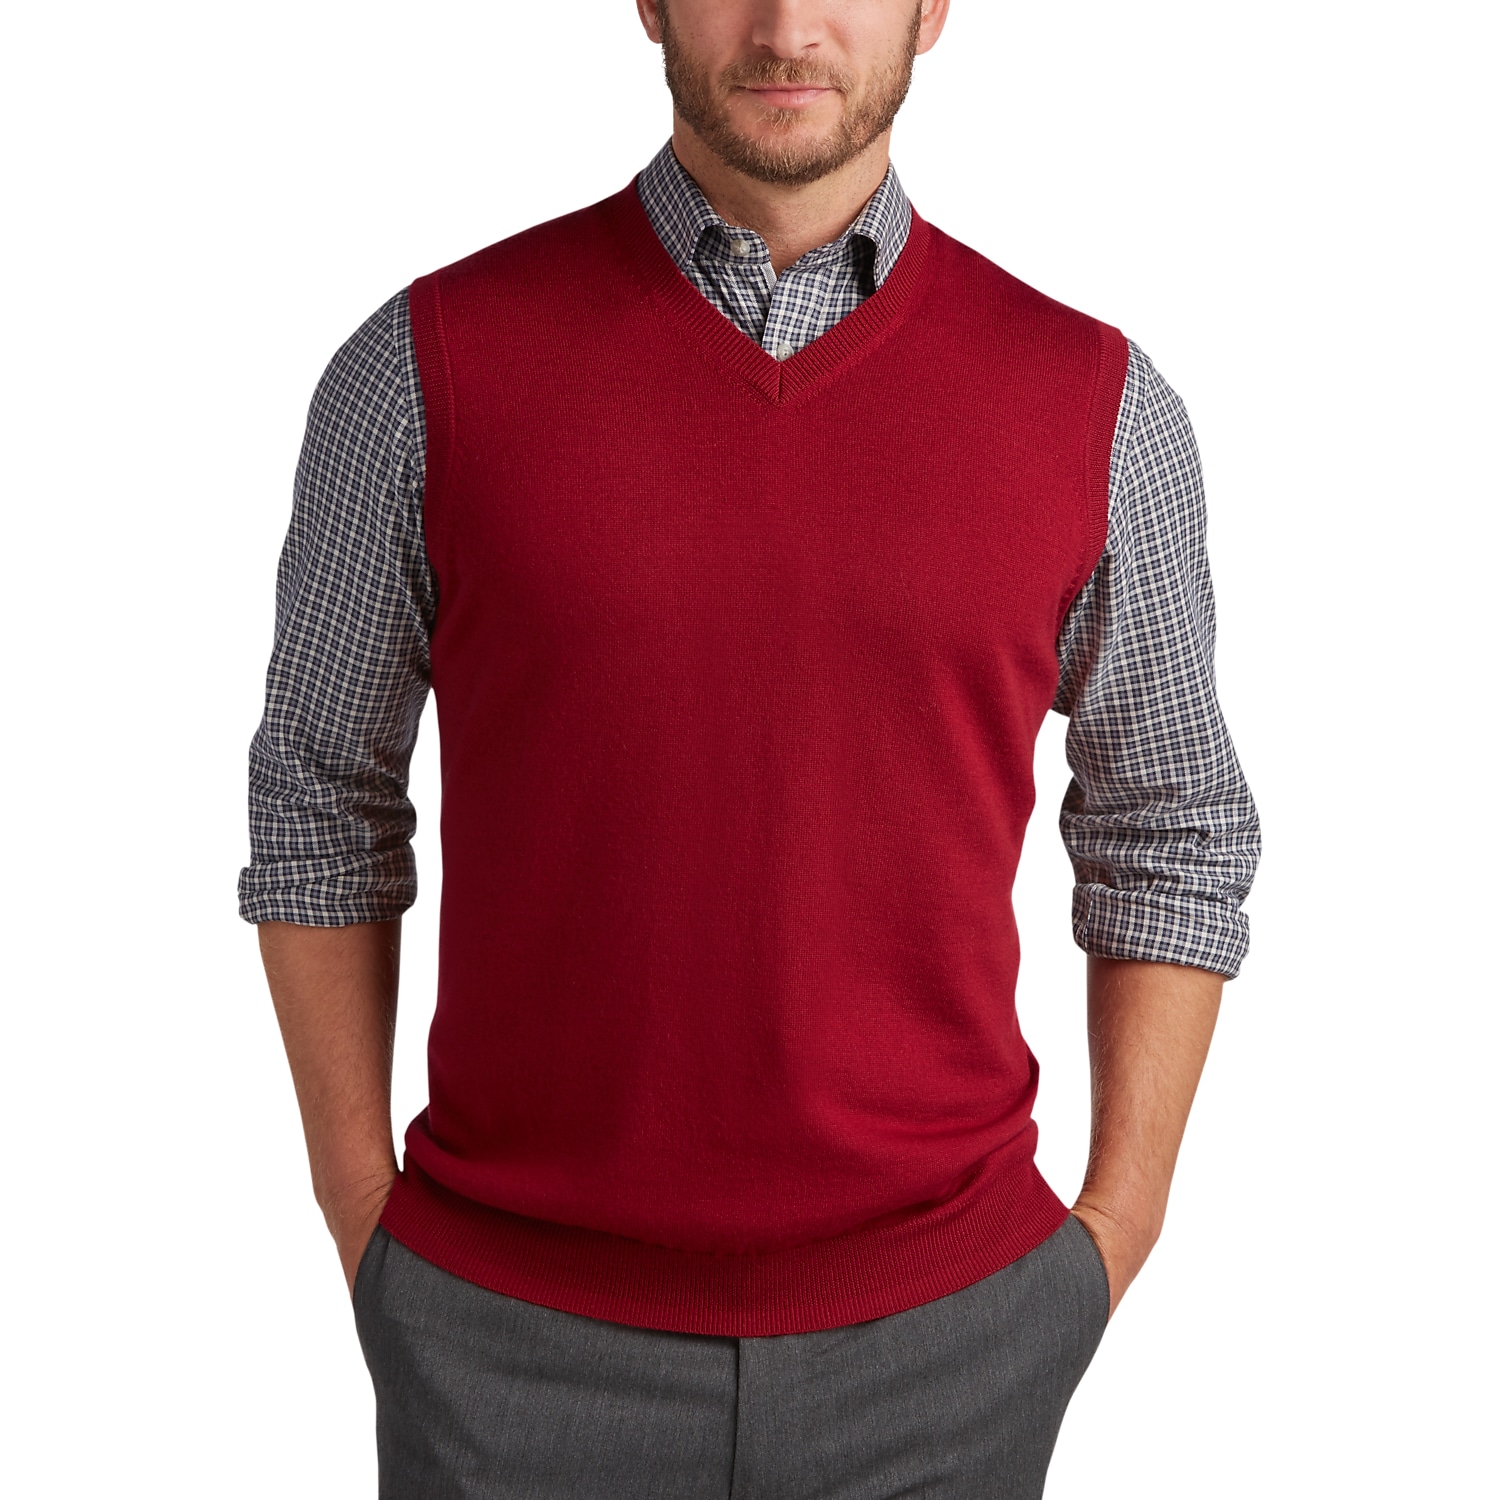 Joseph Abboud Red V-Neck Modern Fit Sweater Vest - Men's Sweater ...